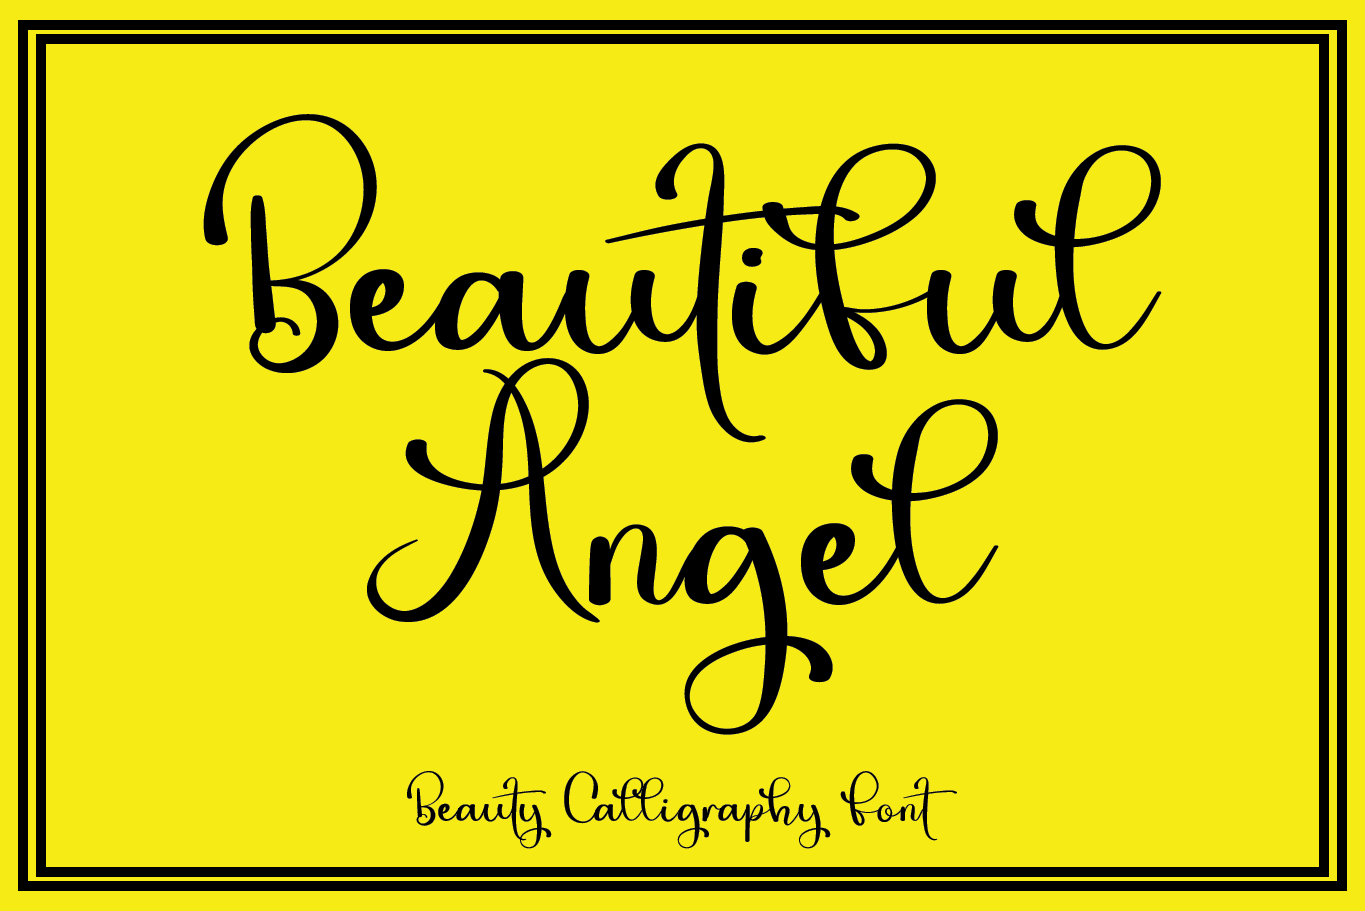 Beautiful Angel